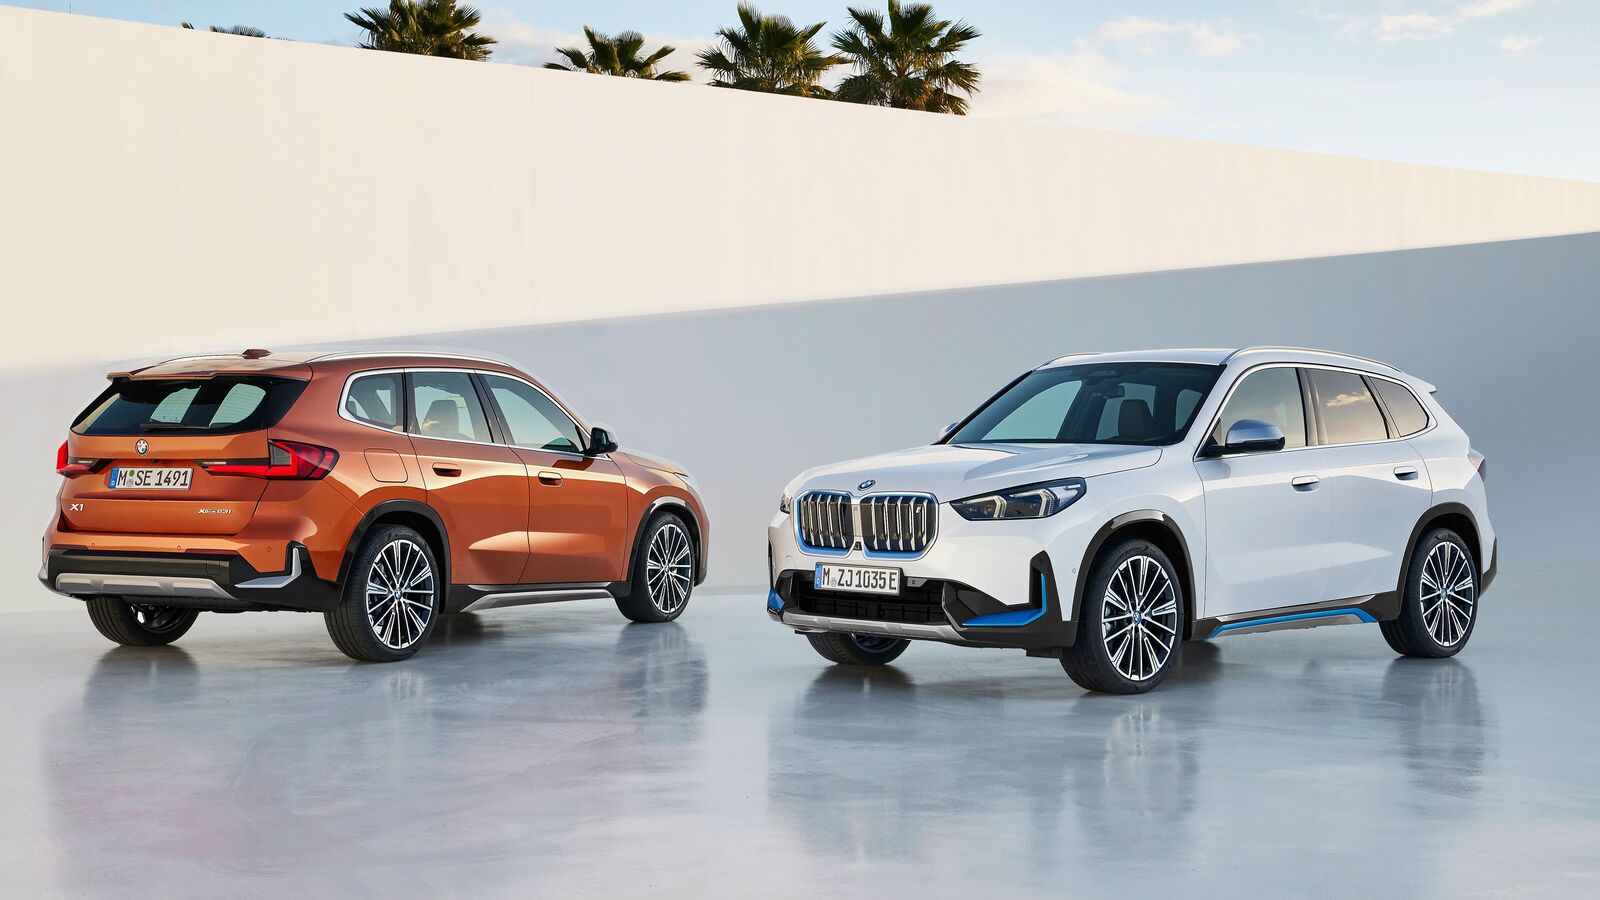 Dragende cirkel boeket droom BMW iX1 electric SUV and X1 facelift SUVs breaks cover | HT Auto